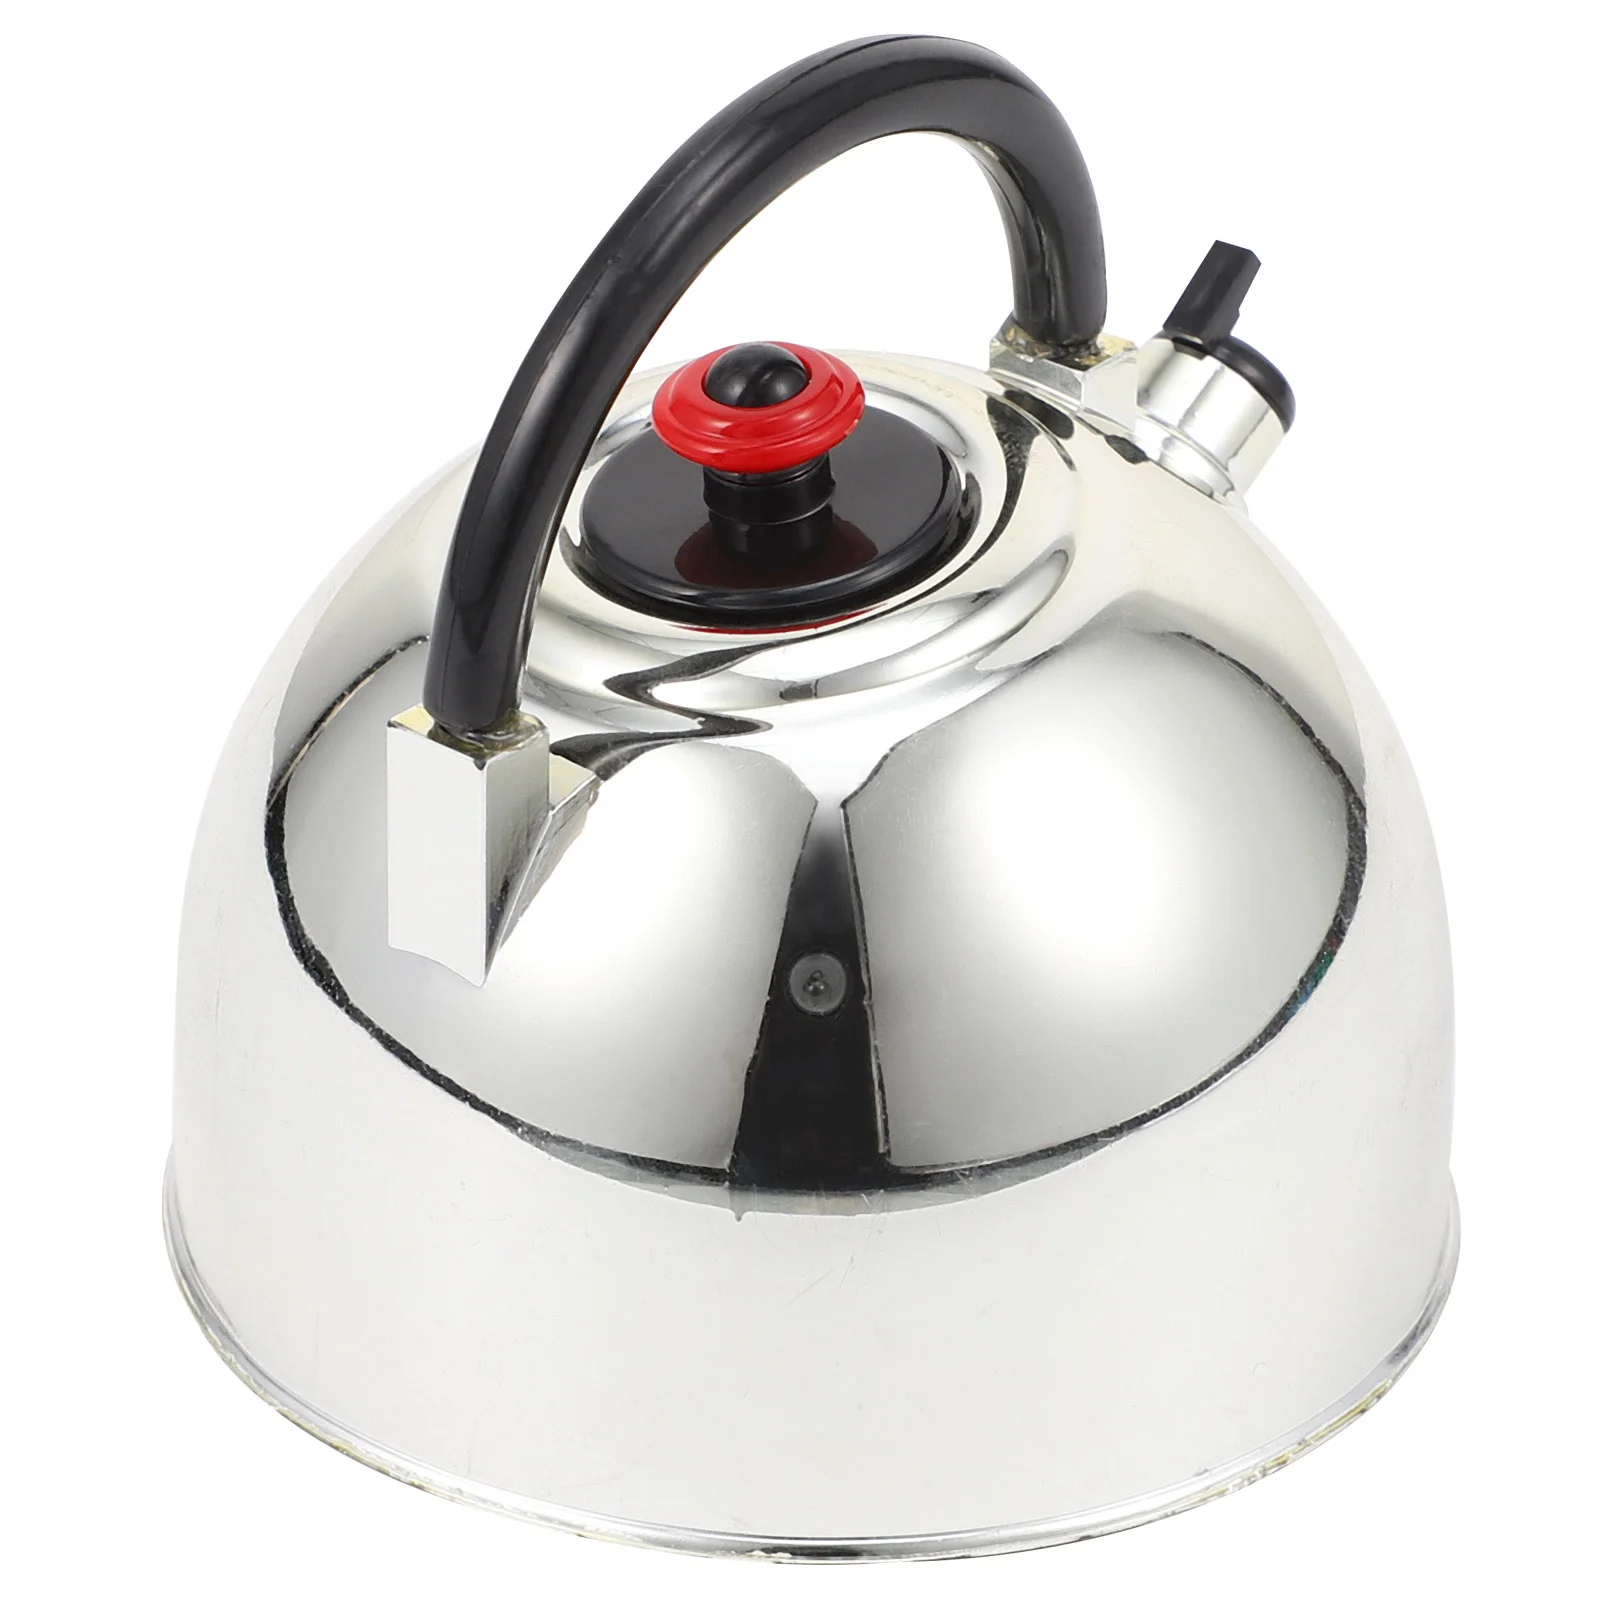 

Timer Kitchen Cooking Alarm Countdown Mechanical Reminder Kettle Teapot Clock Whistling Baking Animal Rotatingtimers Retro